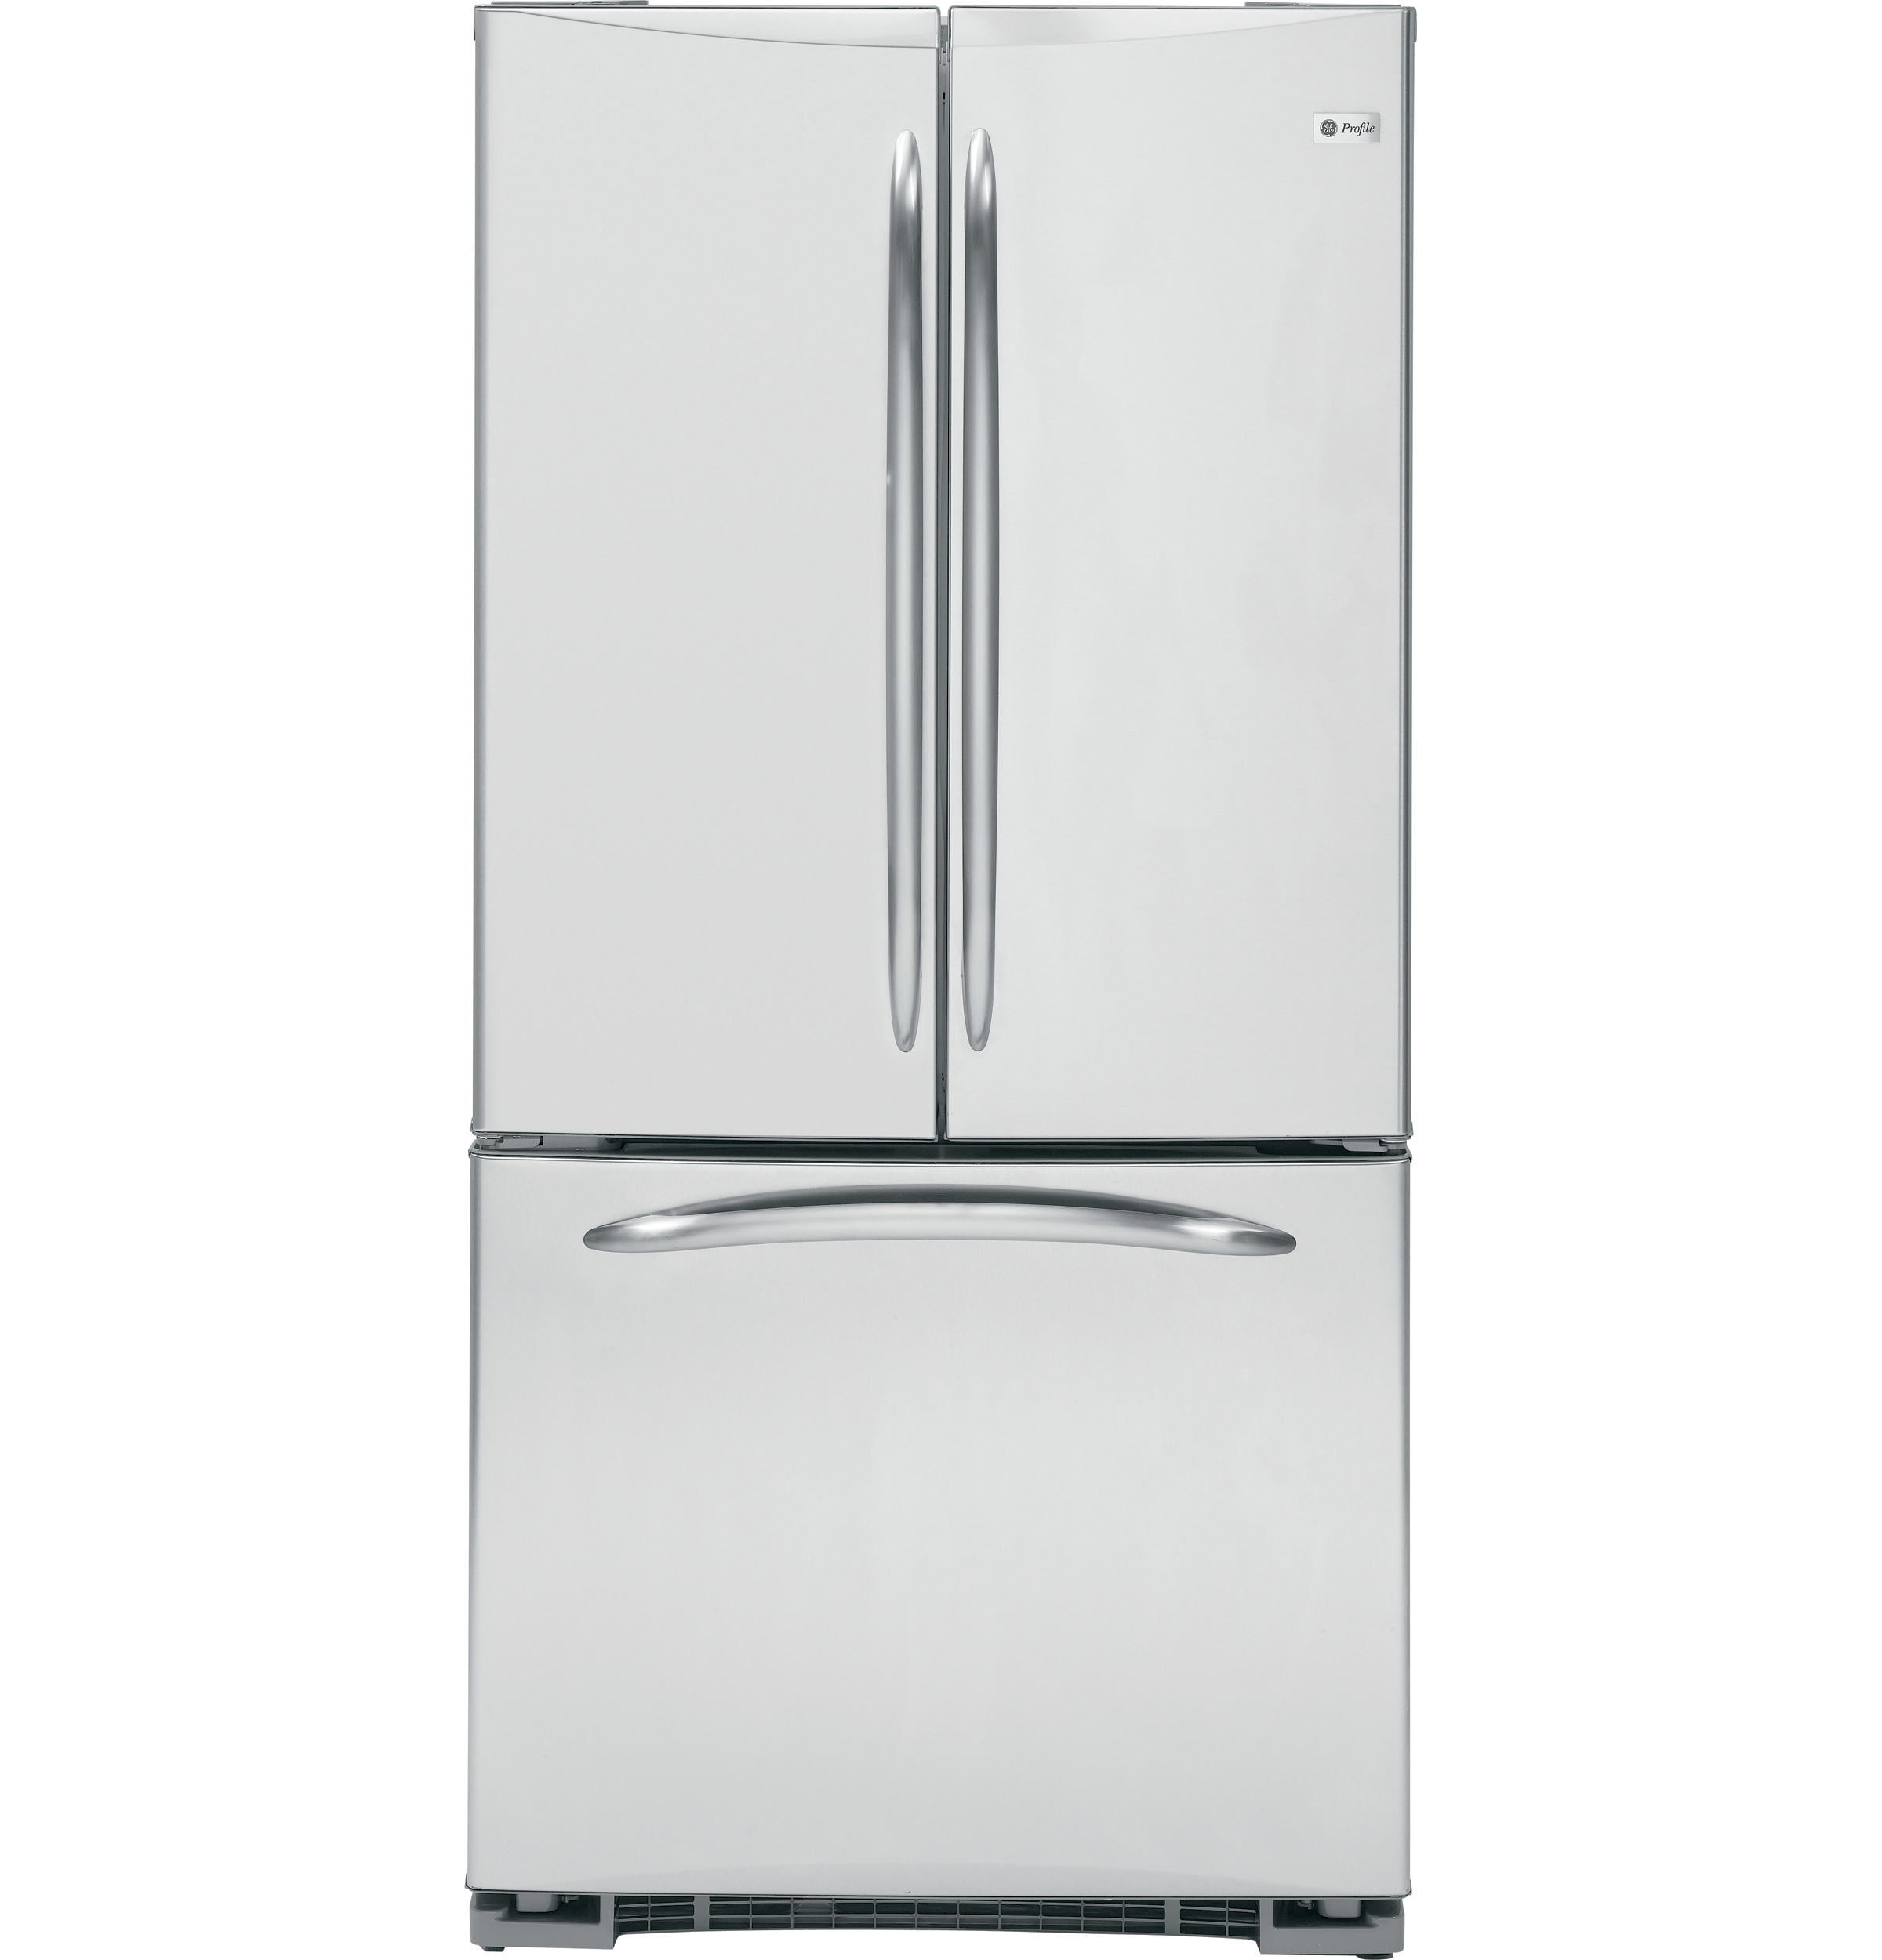 GE Profile™ ENERGY STAR® 22.0 Cu. Ft. Refrigerator with Internal Dispenser